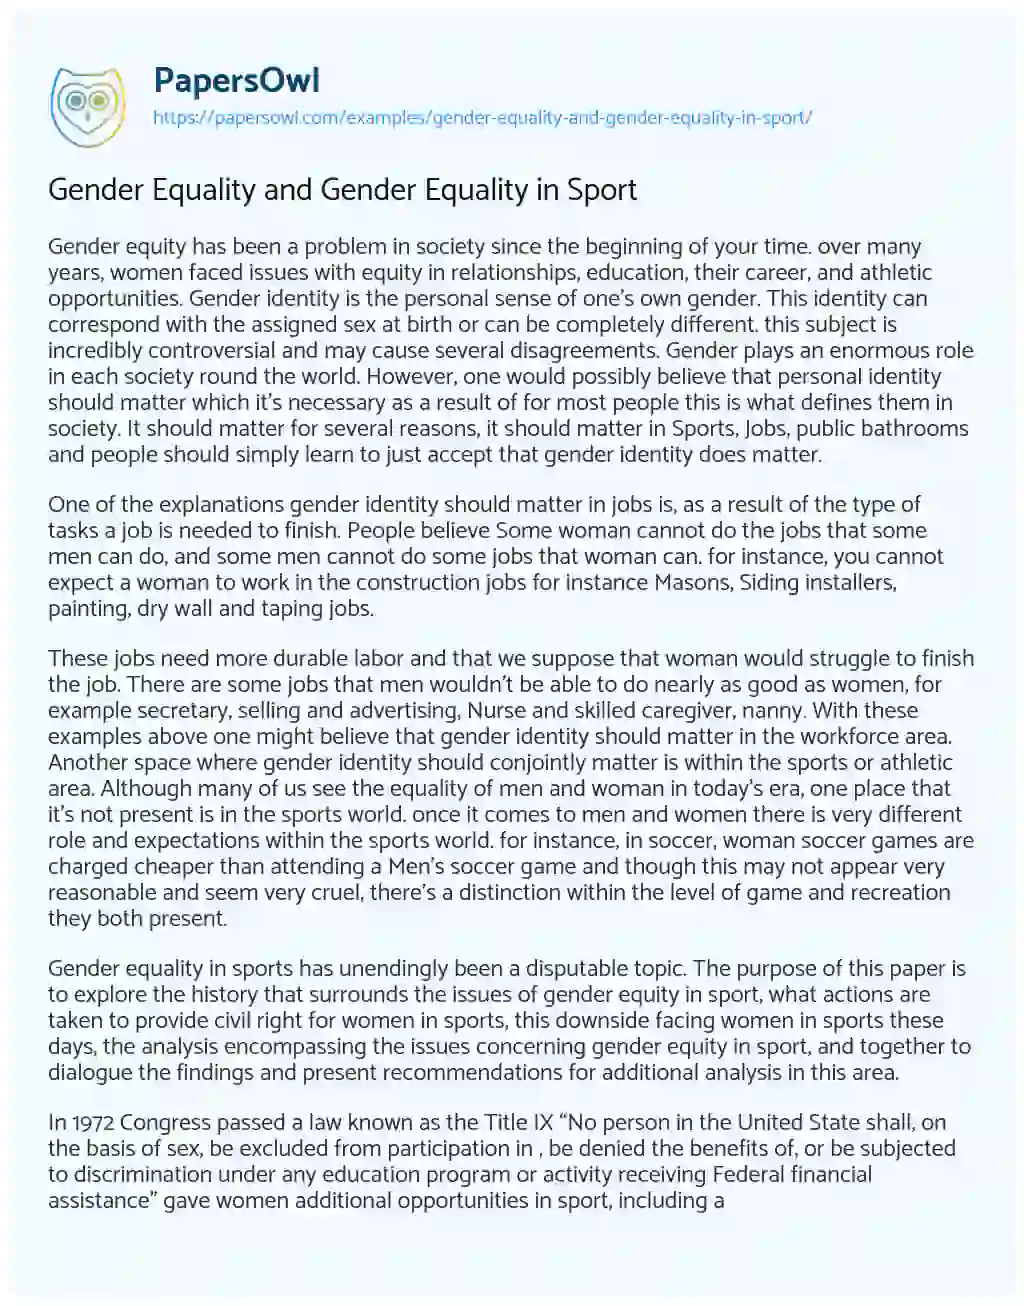 Gender Equality and Gender Equality in Sport essay